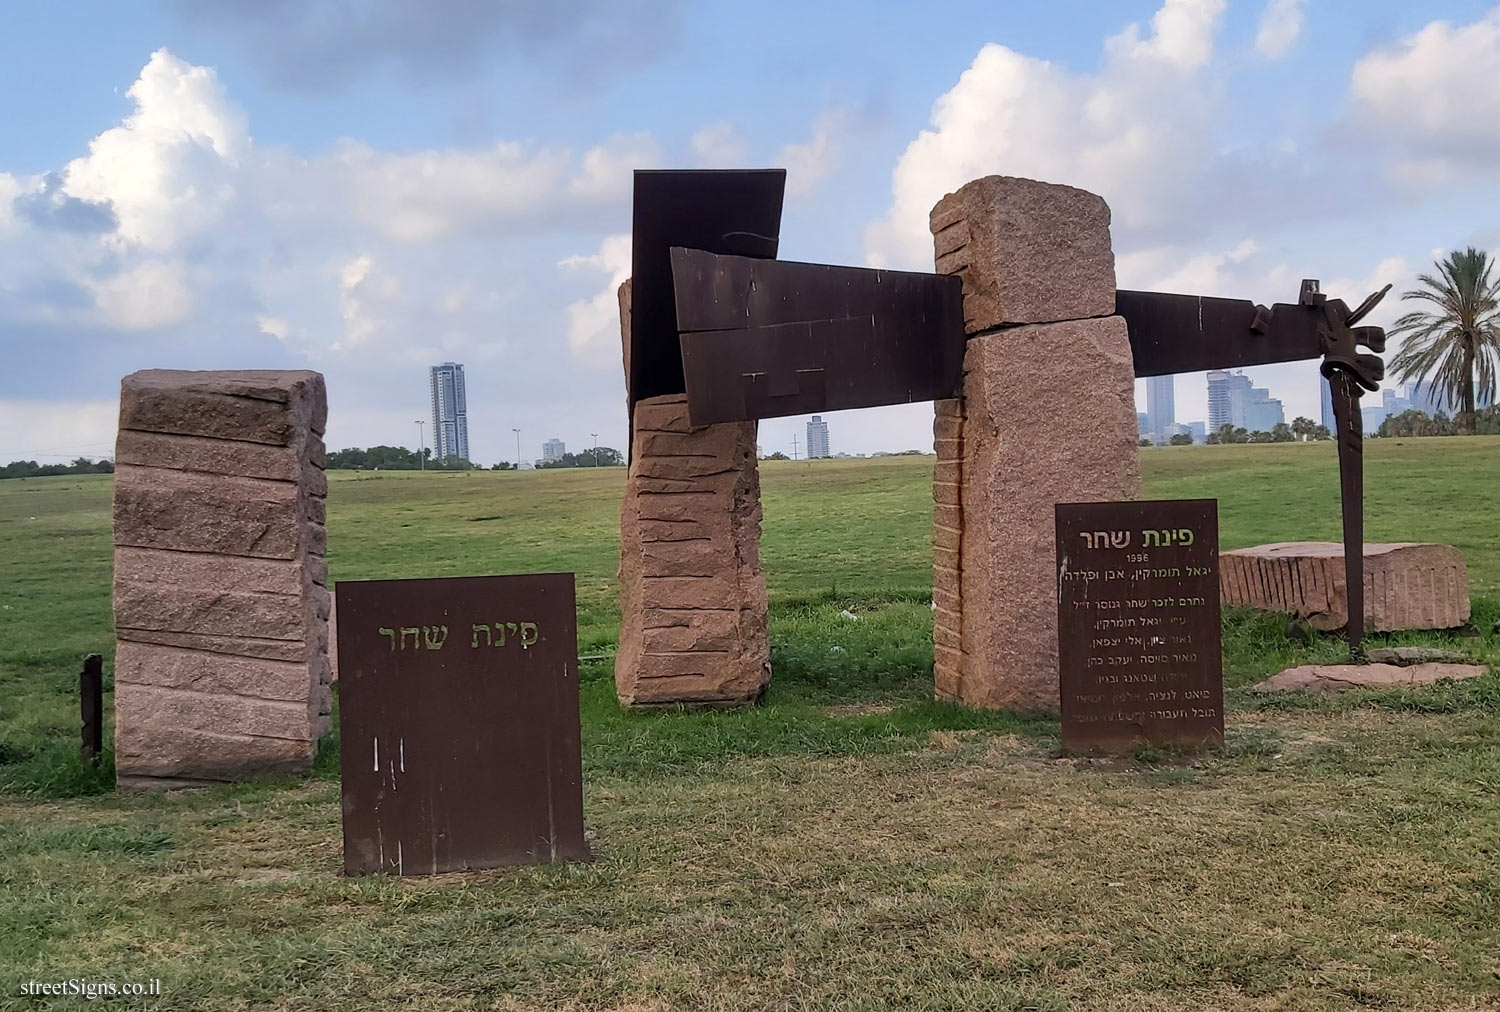 Tel Aviv - Hayarkon Park - "Shachar corner" - Outdoor sculpture by Yigael Tumarkin